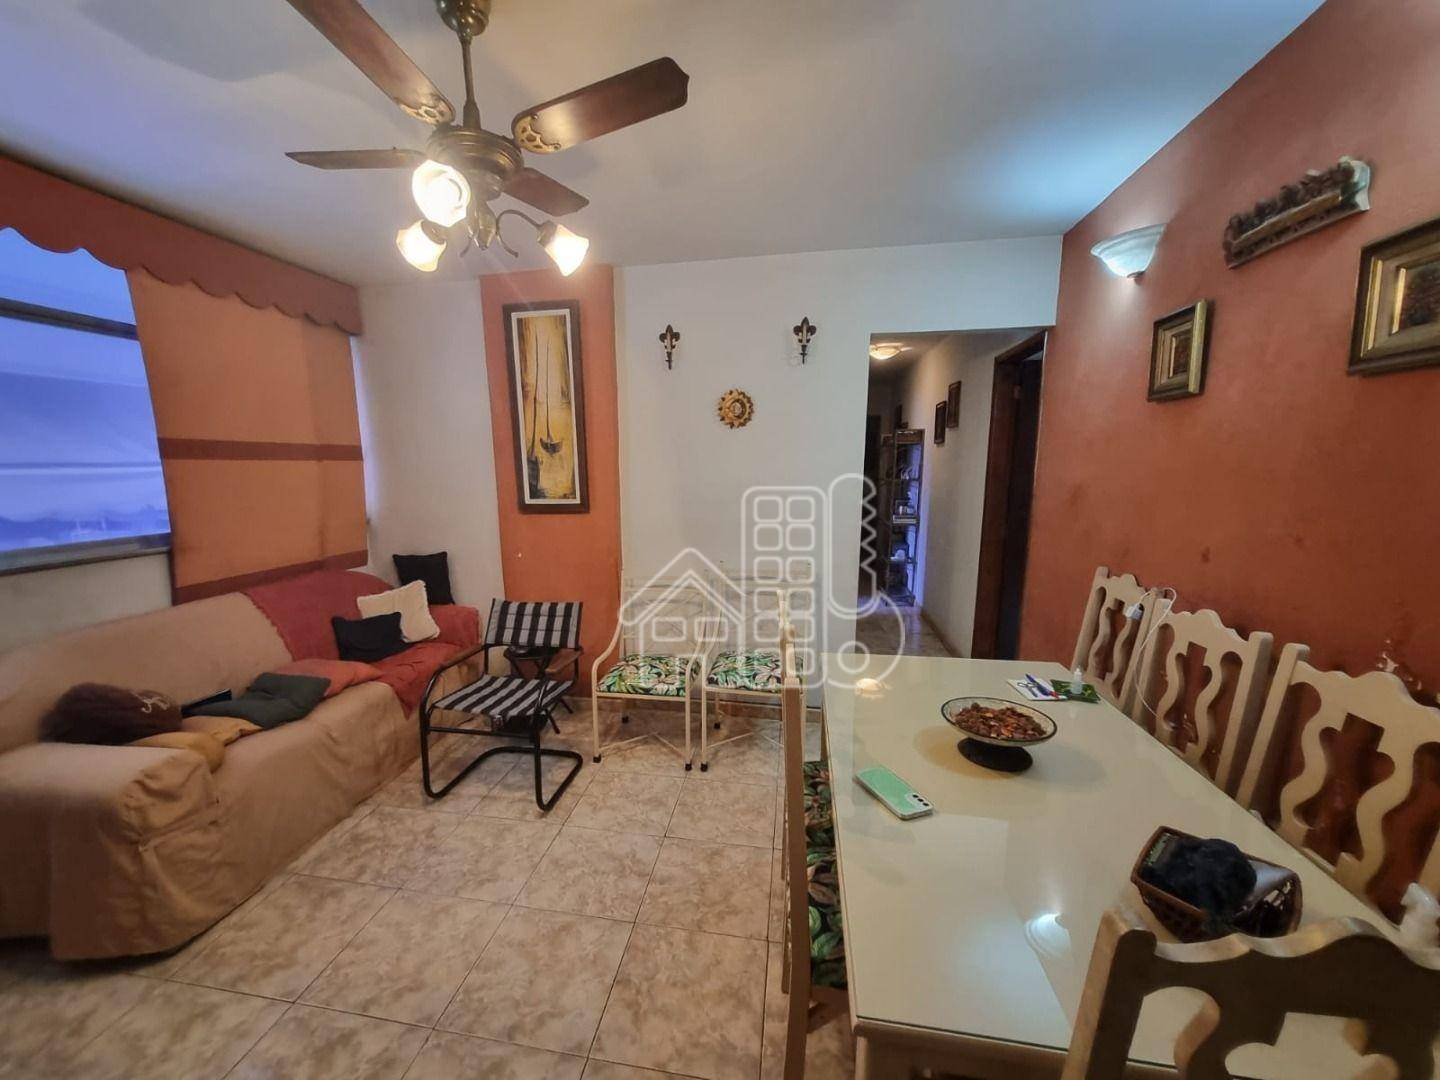 Apartamento à venda, 80 m² por R$ 410.000,00 - Icaraí - Niterói/RJ